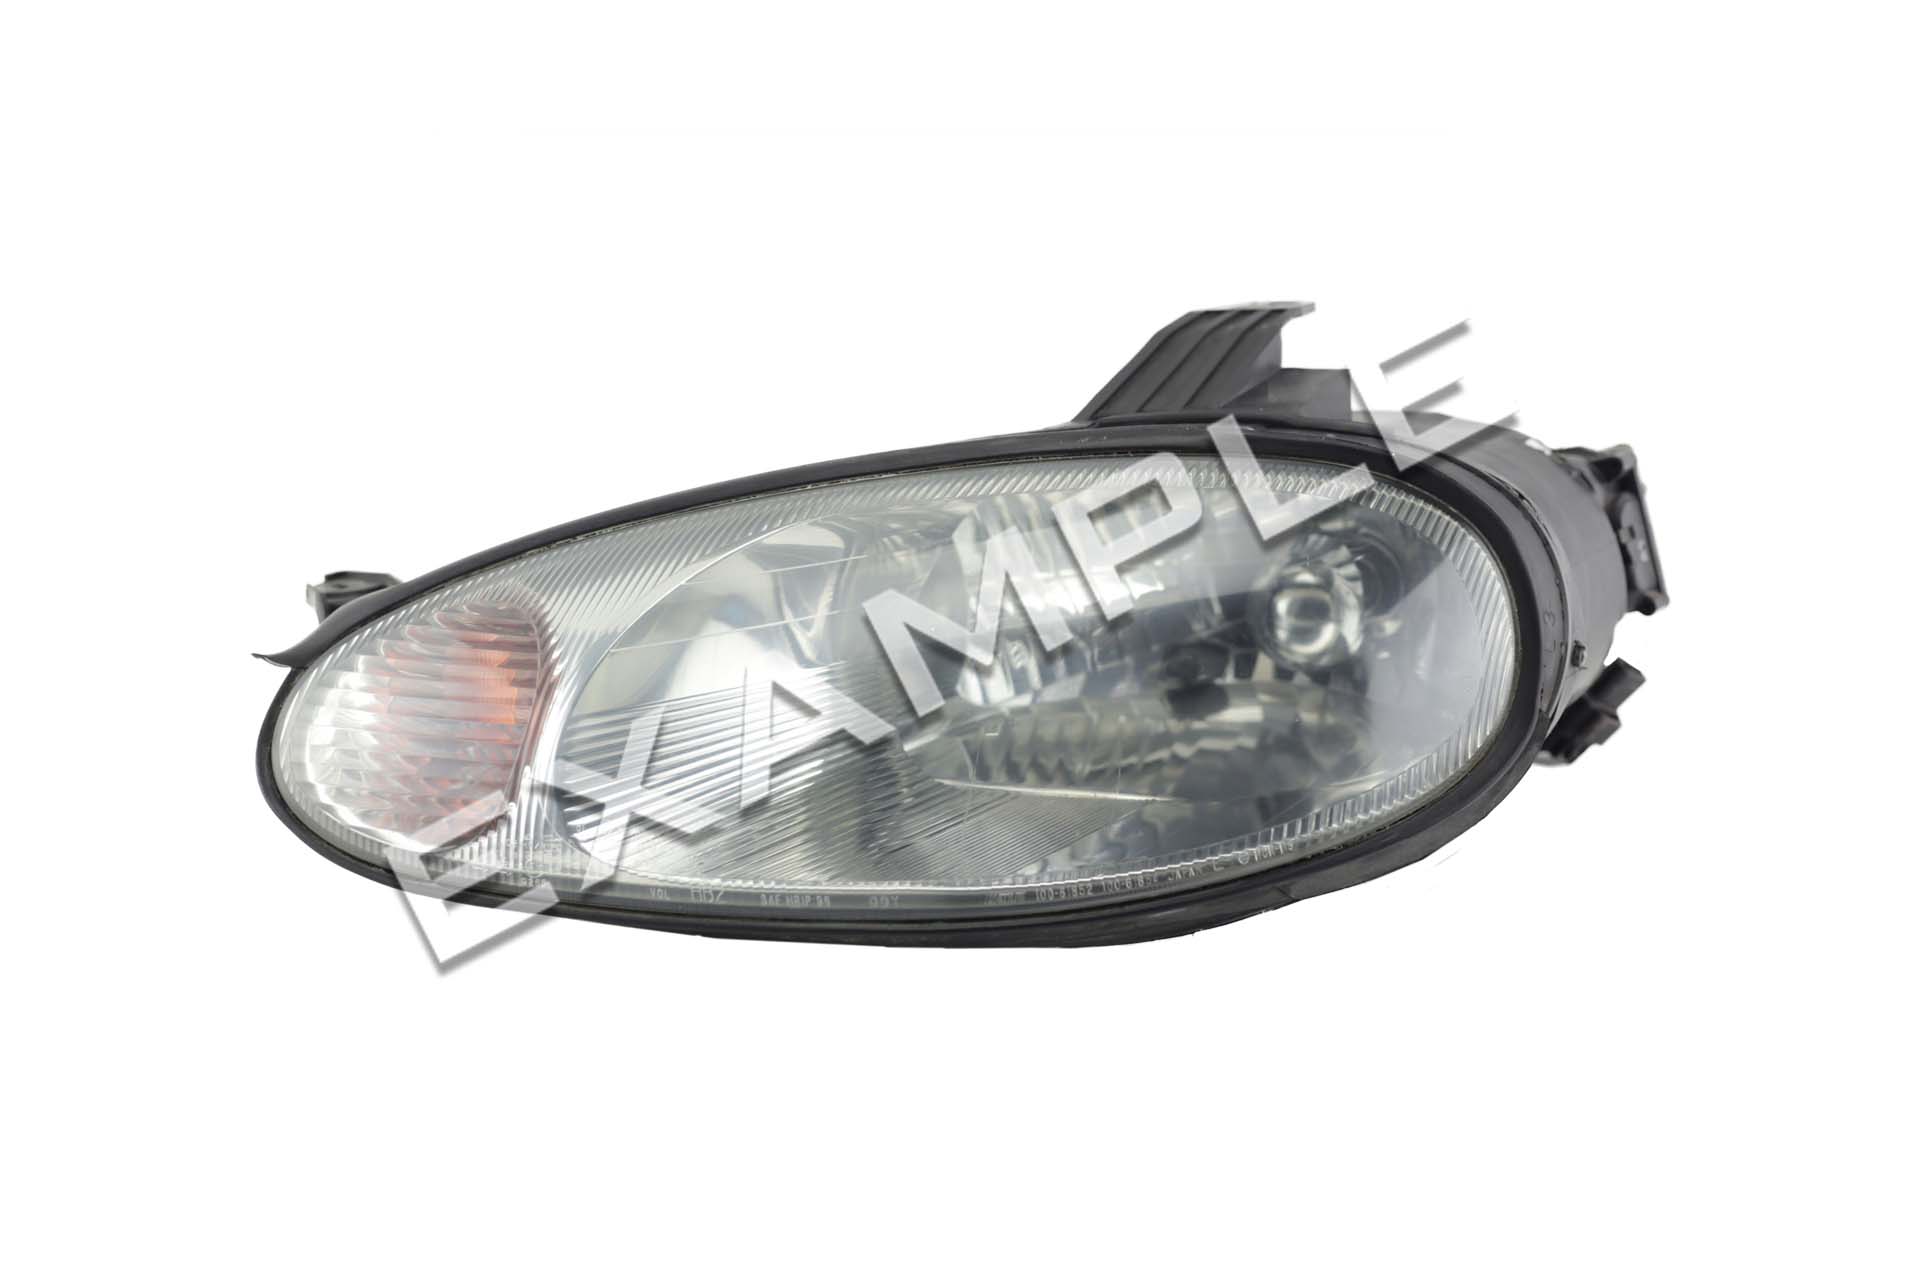 Mazda MX-5 Miata NB1 Pre-FL 98-00 Bi-LED licht upgrade retrofit kit voor halogeen reflector koplampen